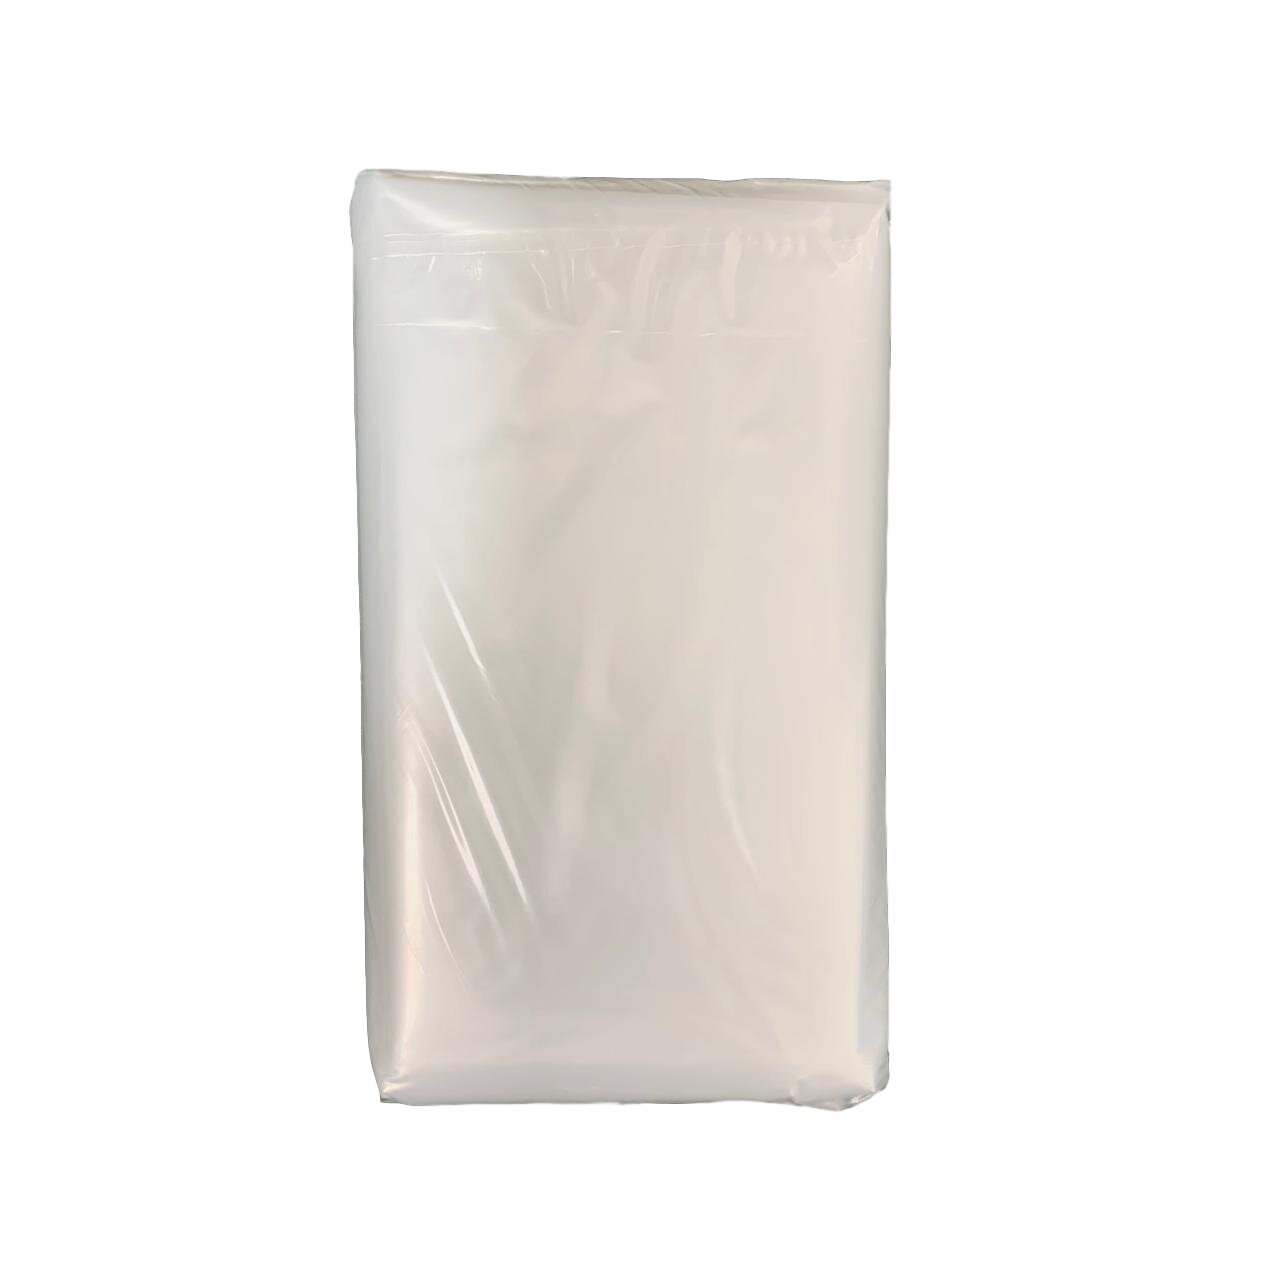  Secbolt - Bolsa de plástico transparente de polietileno de polietileno  resistente, 75 pulgadas de ancho x 106 pulgadas de alto, grosor de 5.9 mil